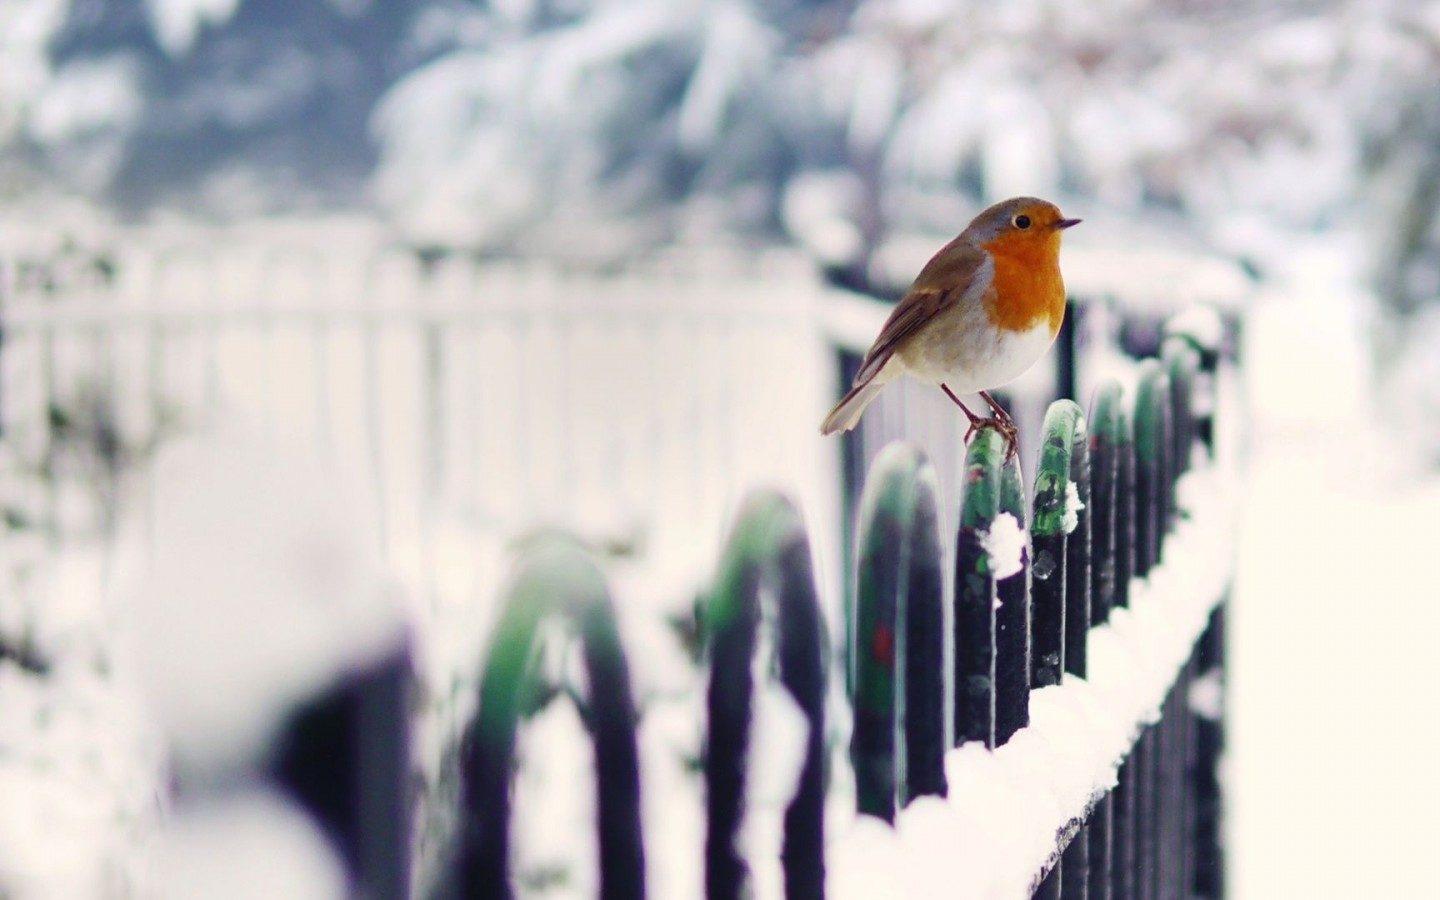 HD Wallpaper Of The European Robin Bird During Winter Time